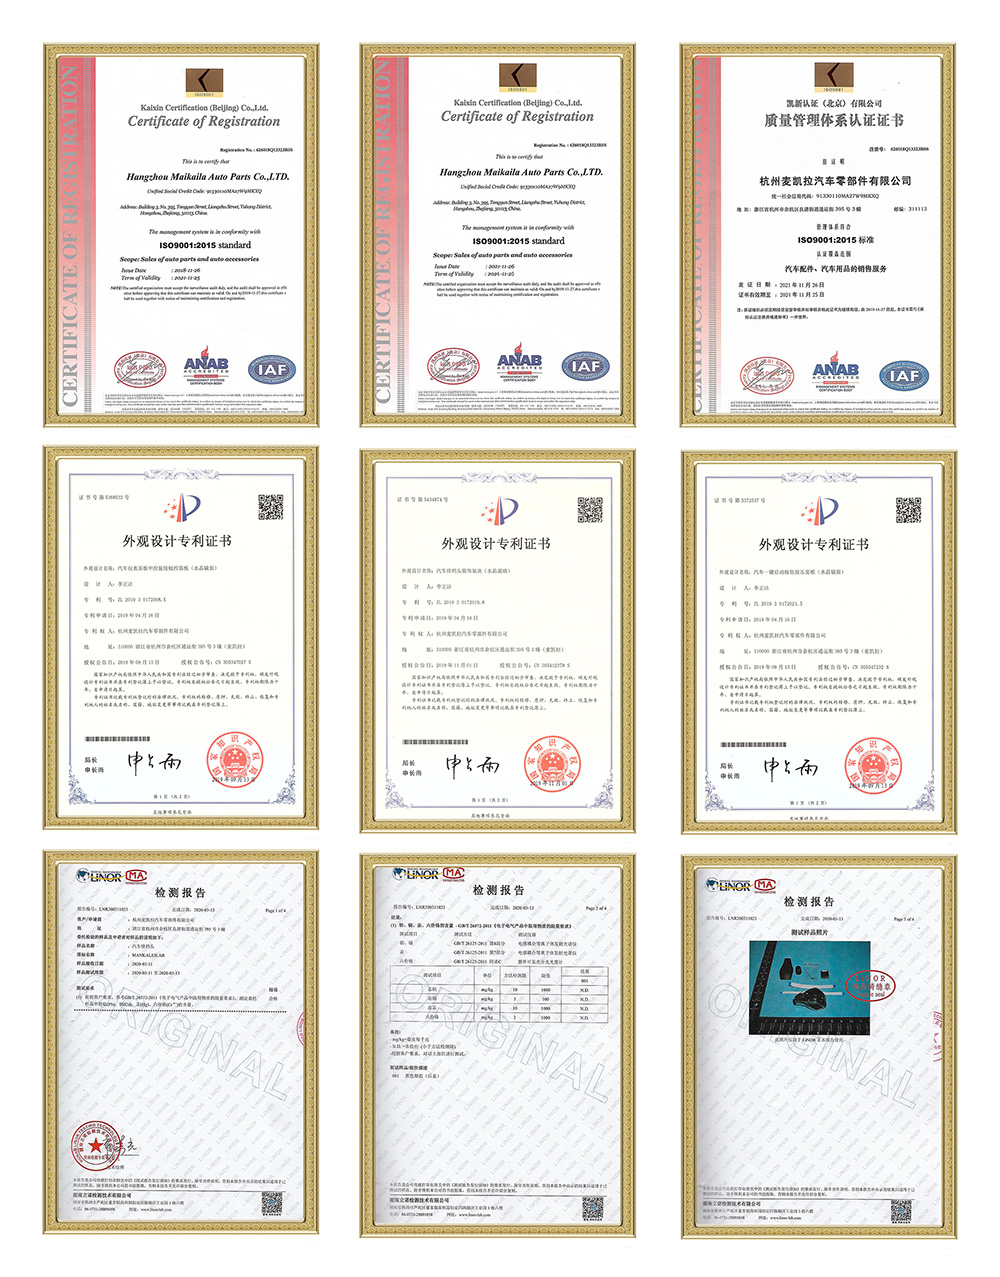 Mankaleilab BMW Crystal Shifter Certificate